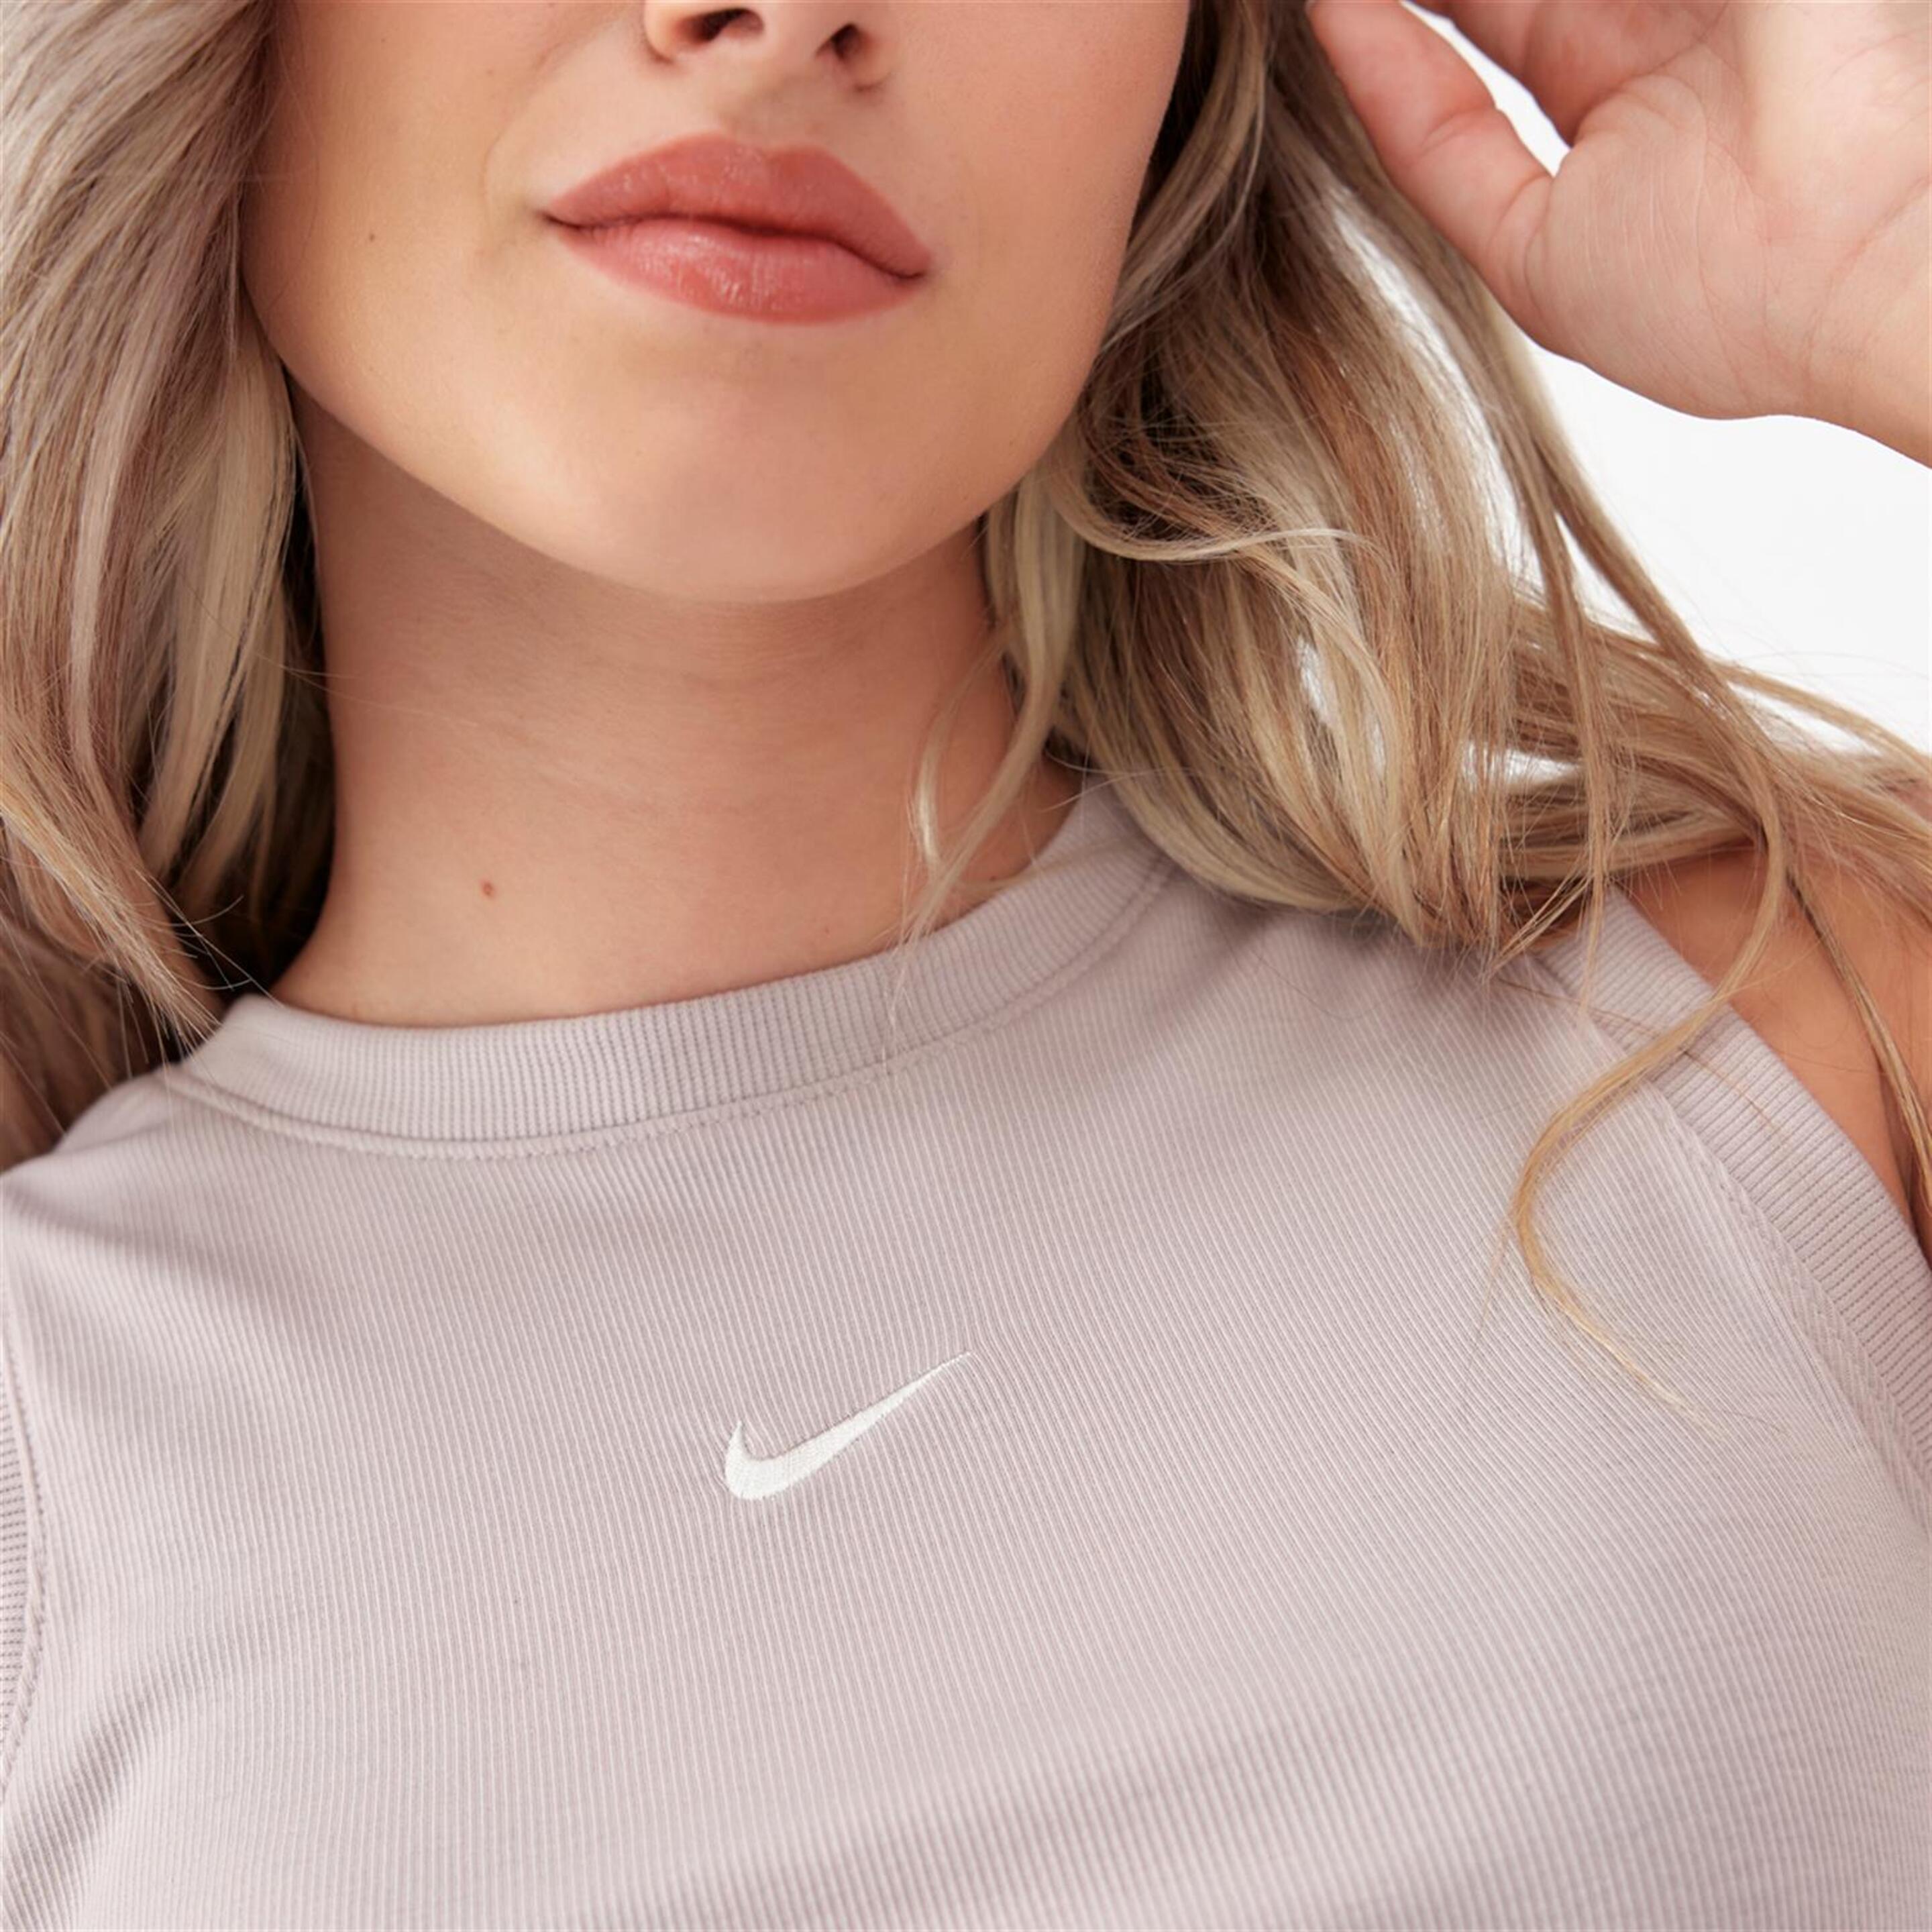 Camiseta Nike - Plateado - Crop Top Mujer